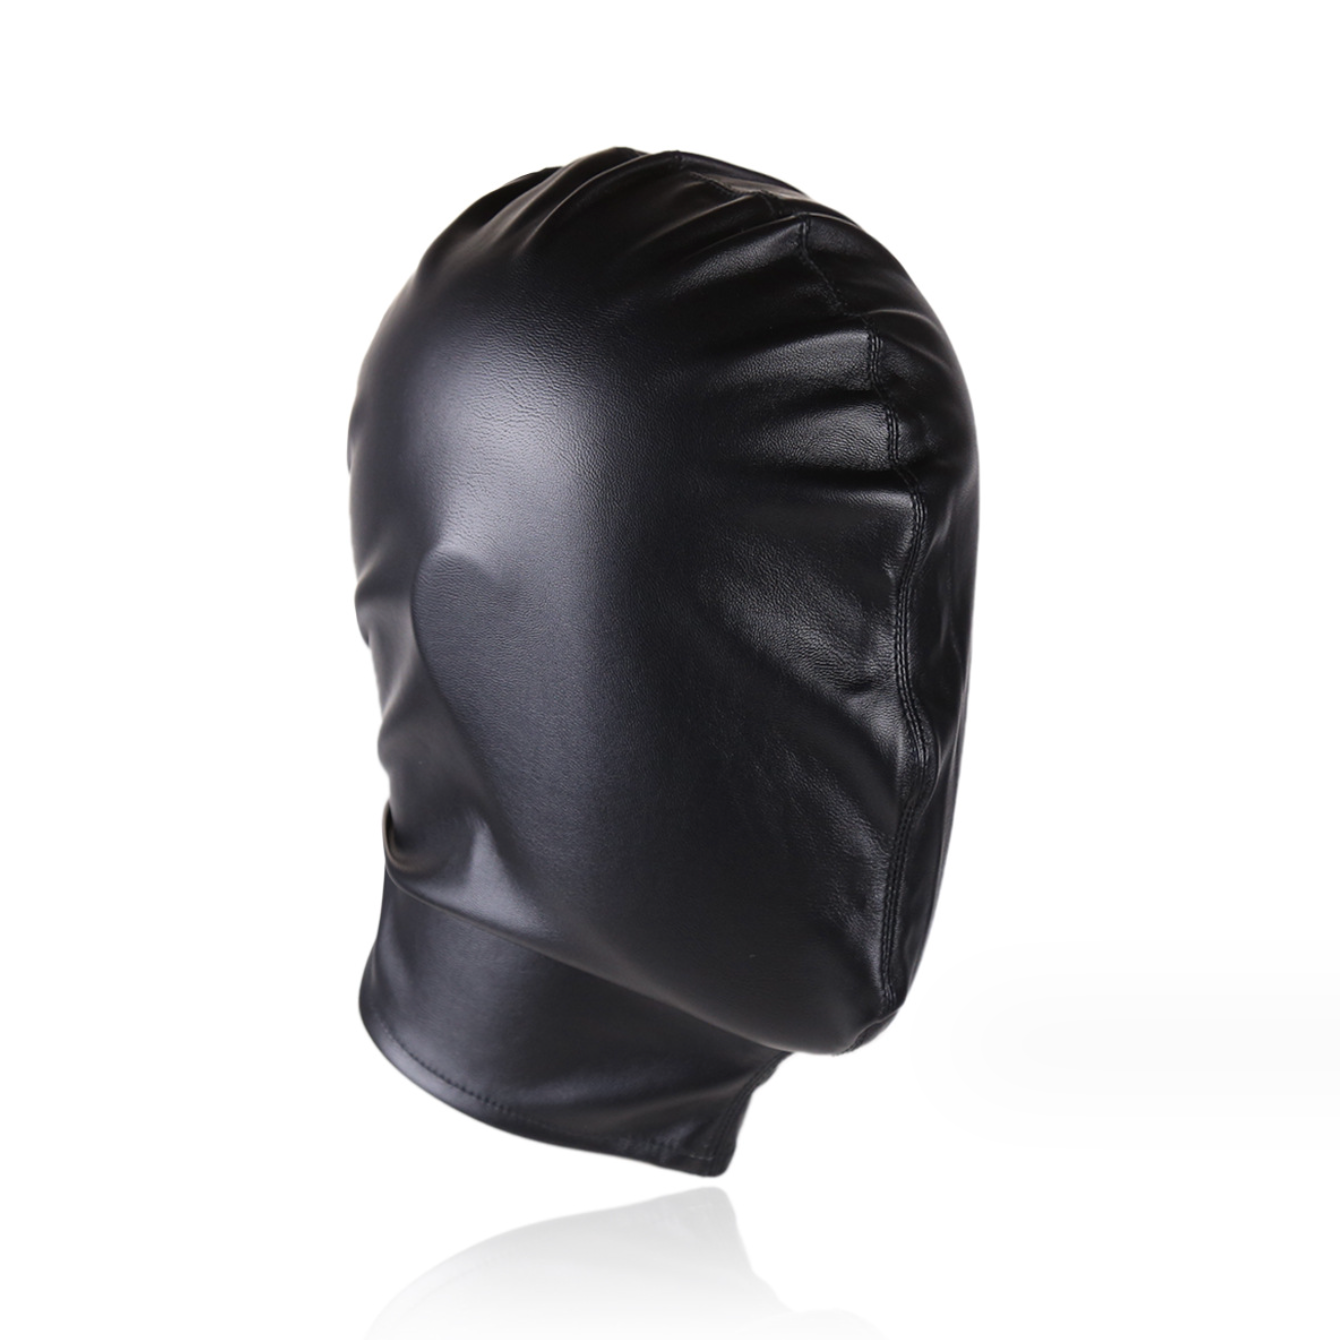 Black leather head mask restraint bondage BDSM V3 皮革头部封闭口塞束缚调教 V3 BDSM 1498